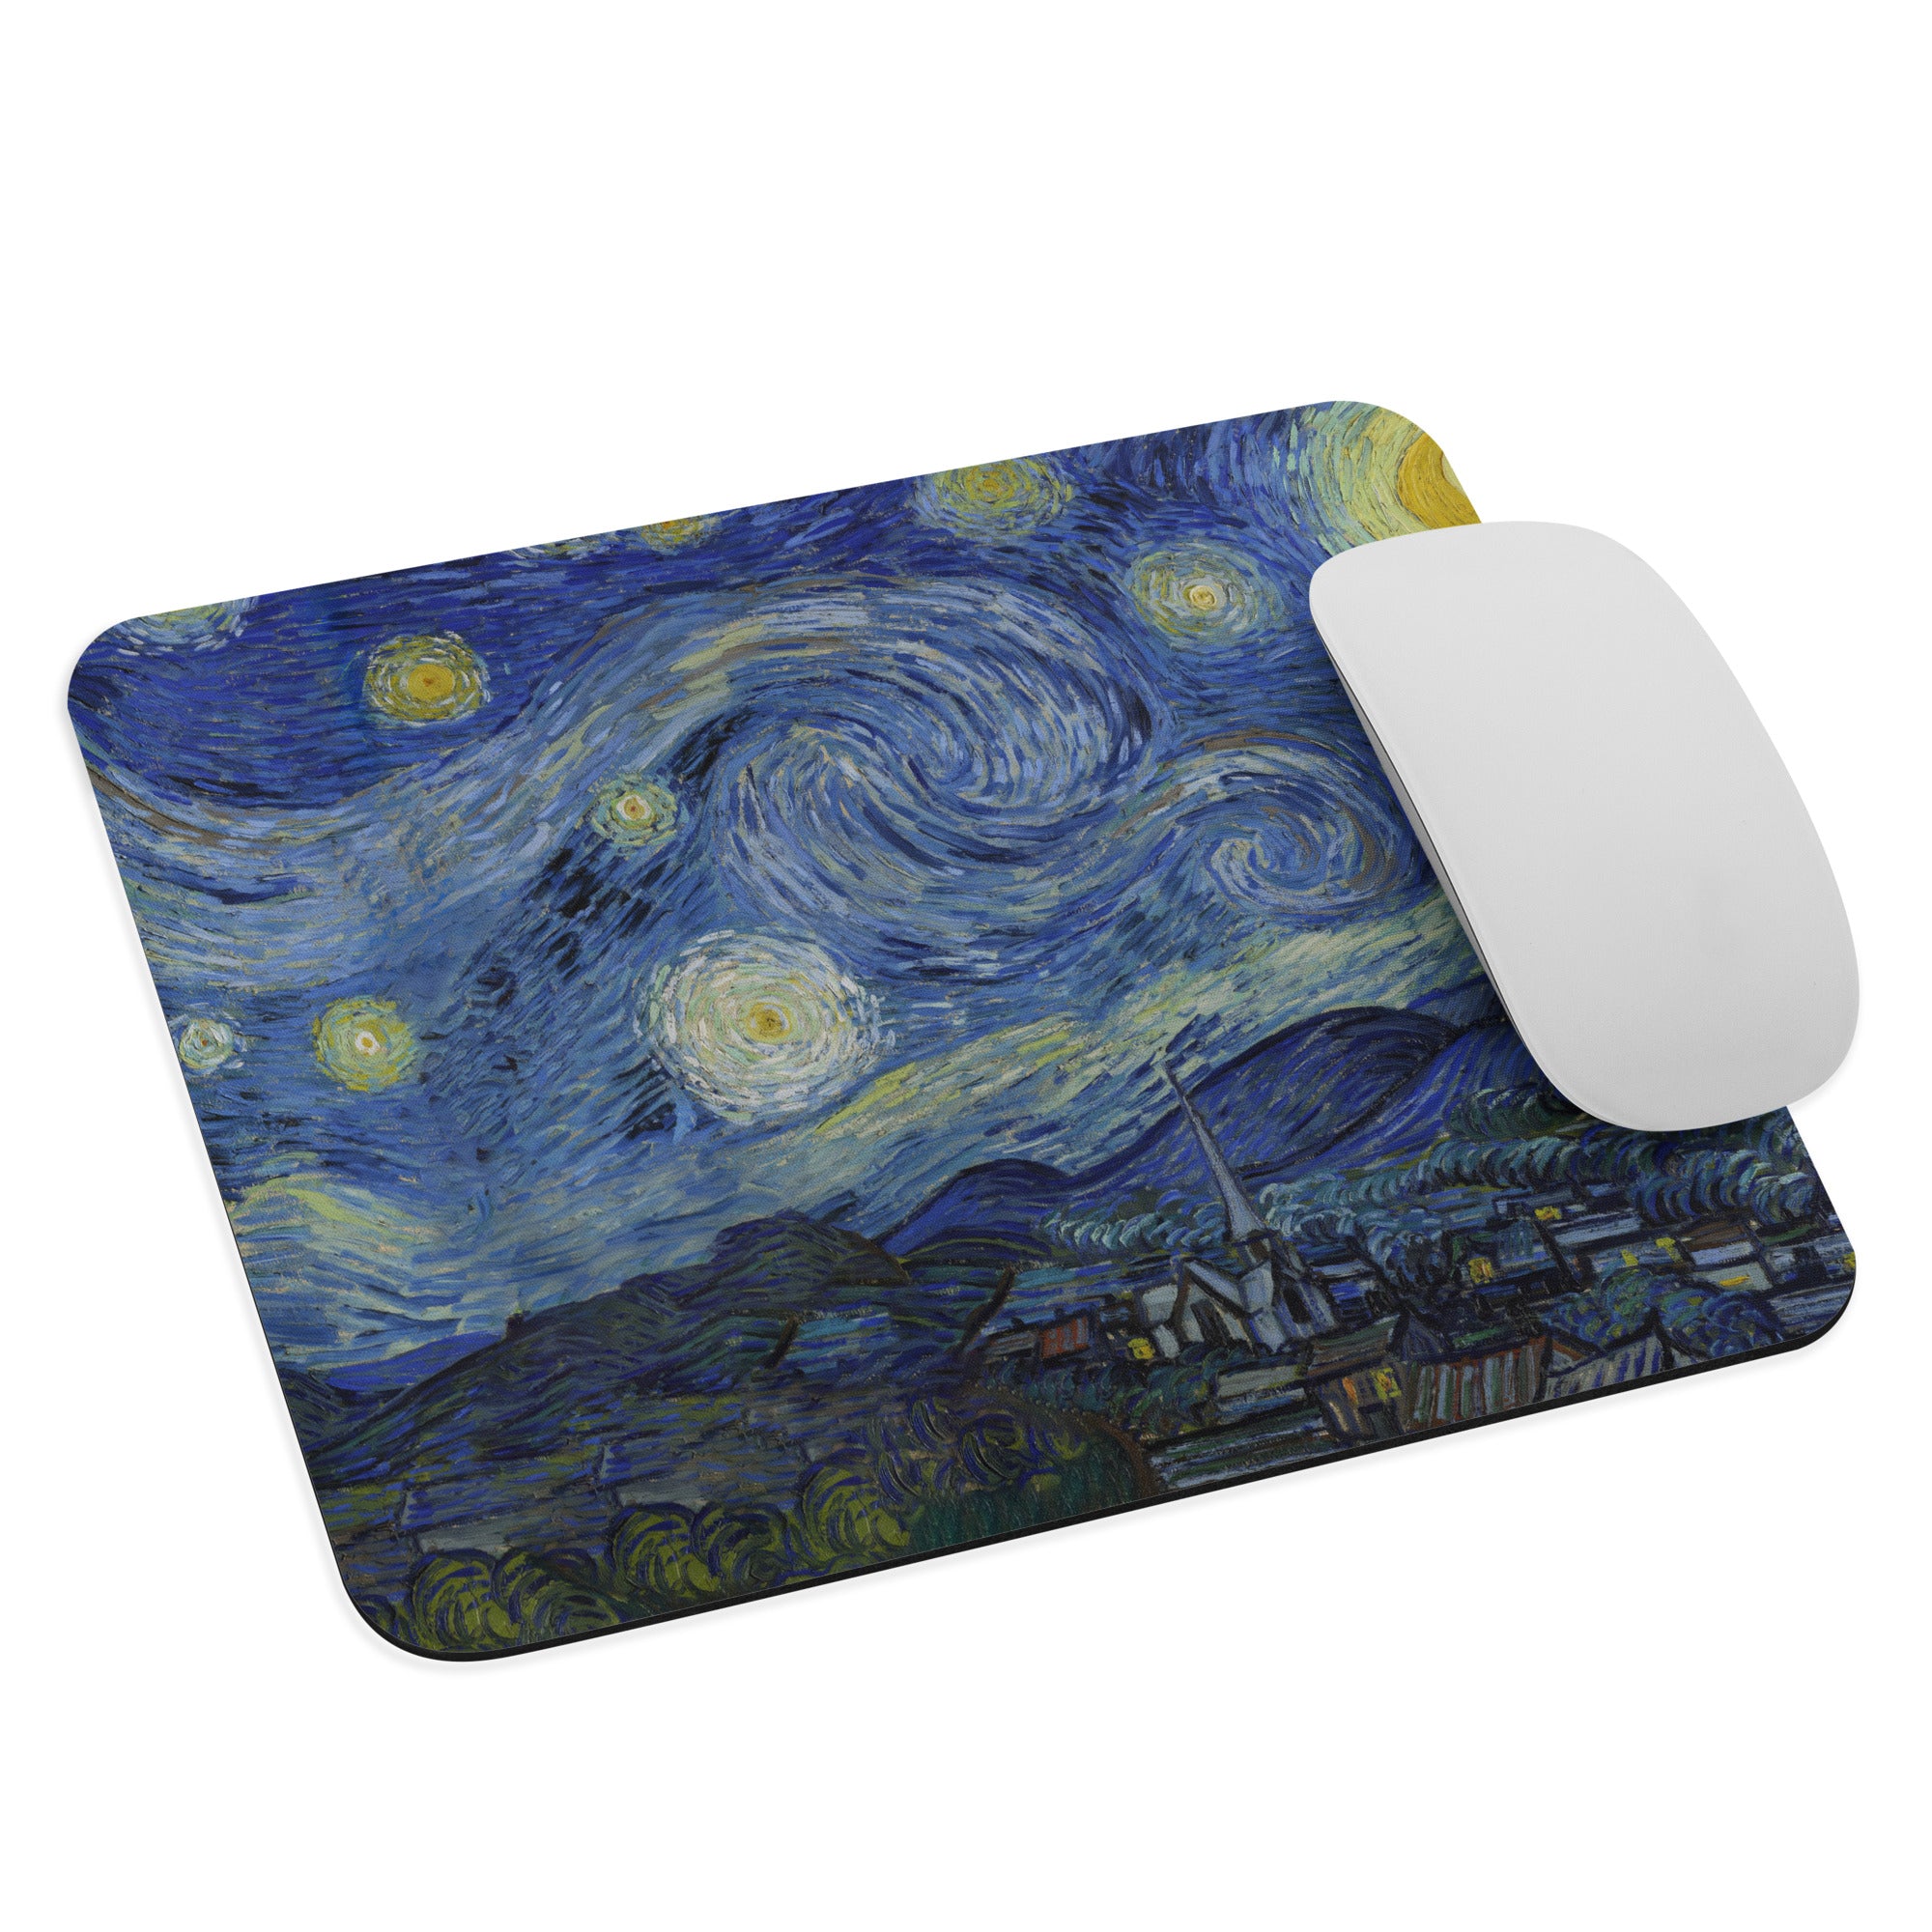 Vincent van Gogh 'Starry Night' Famous Painting Mouse Pad | Premium Art Mouse Pad